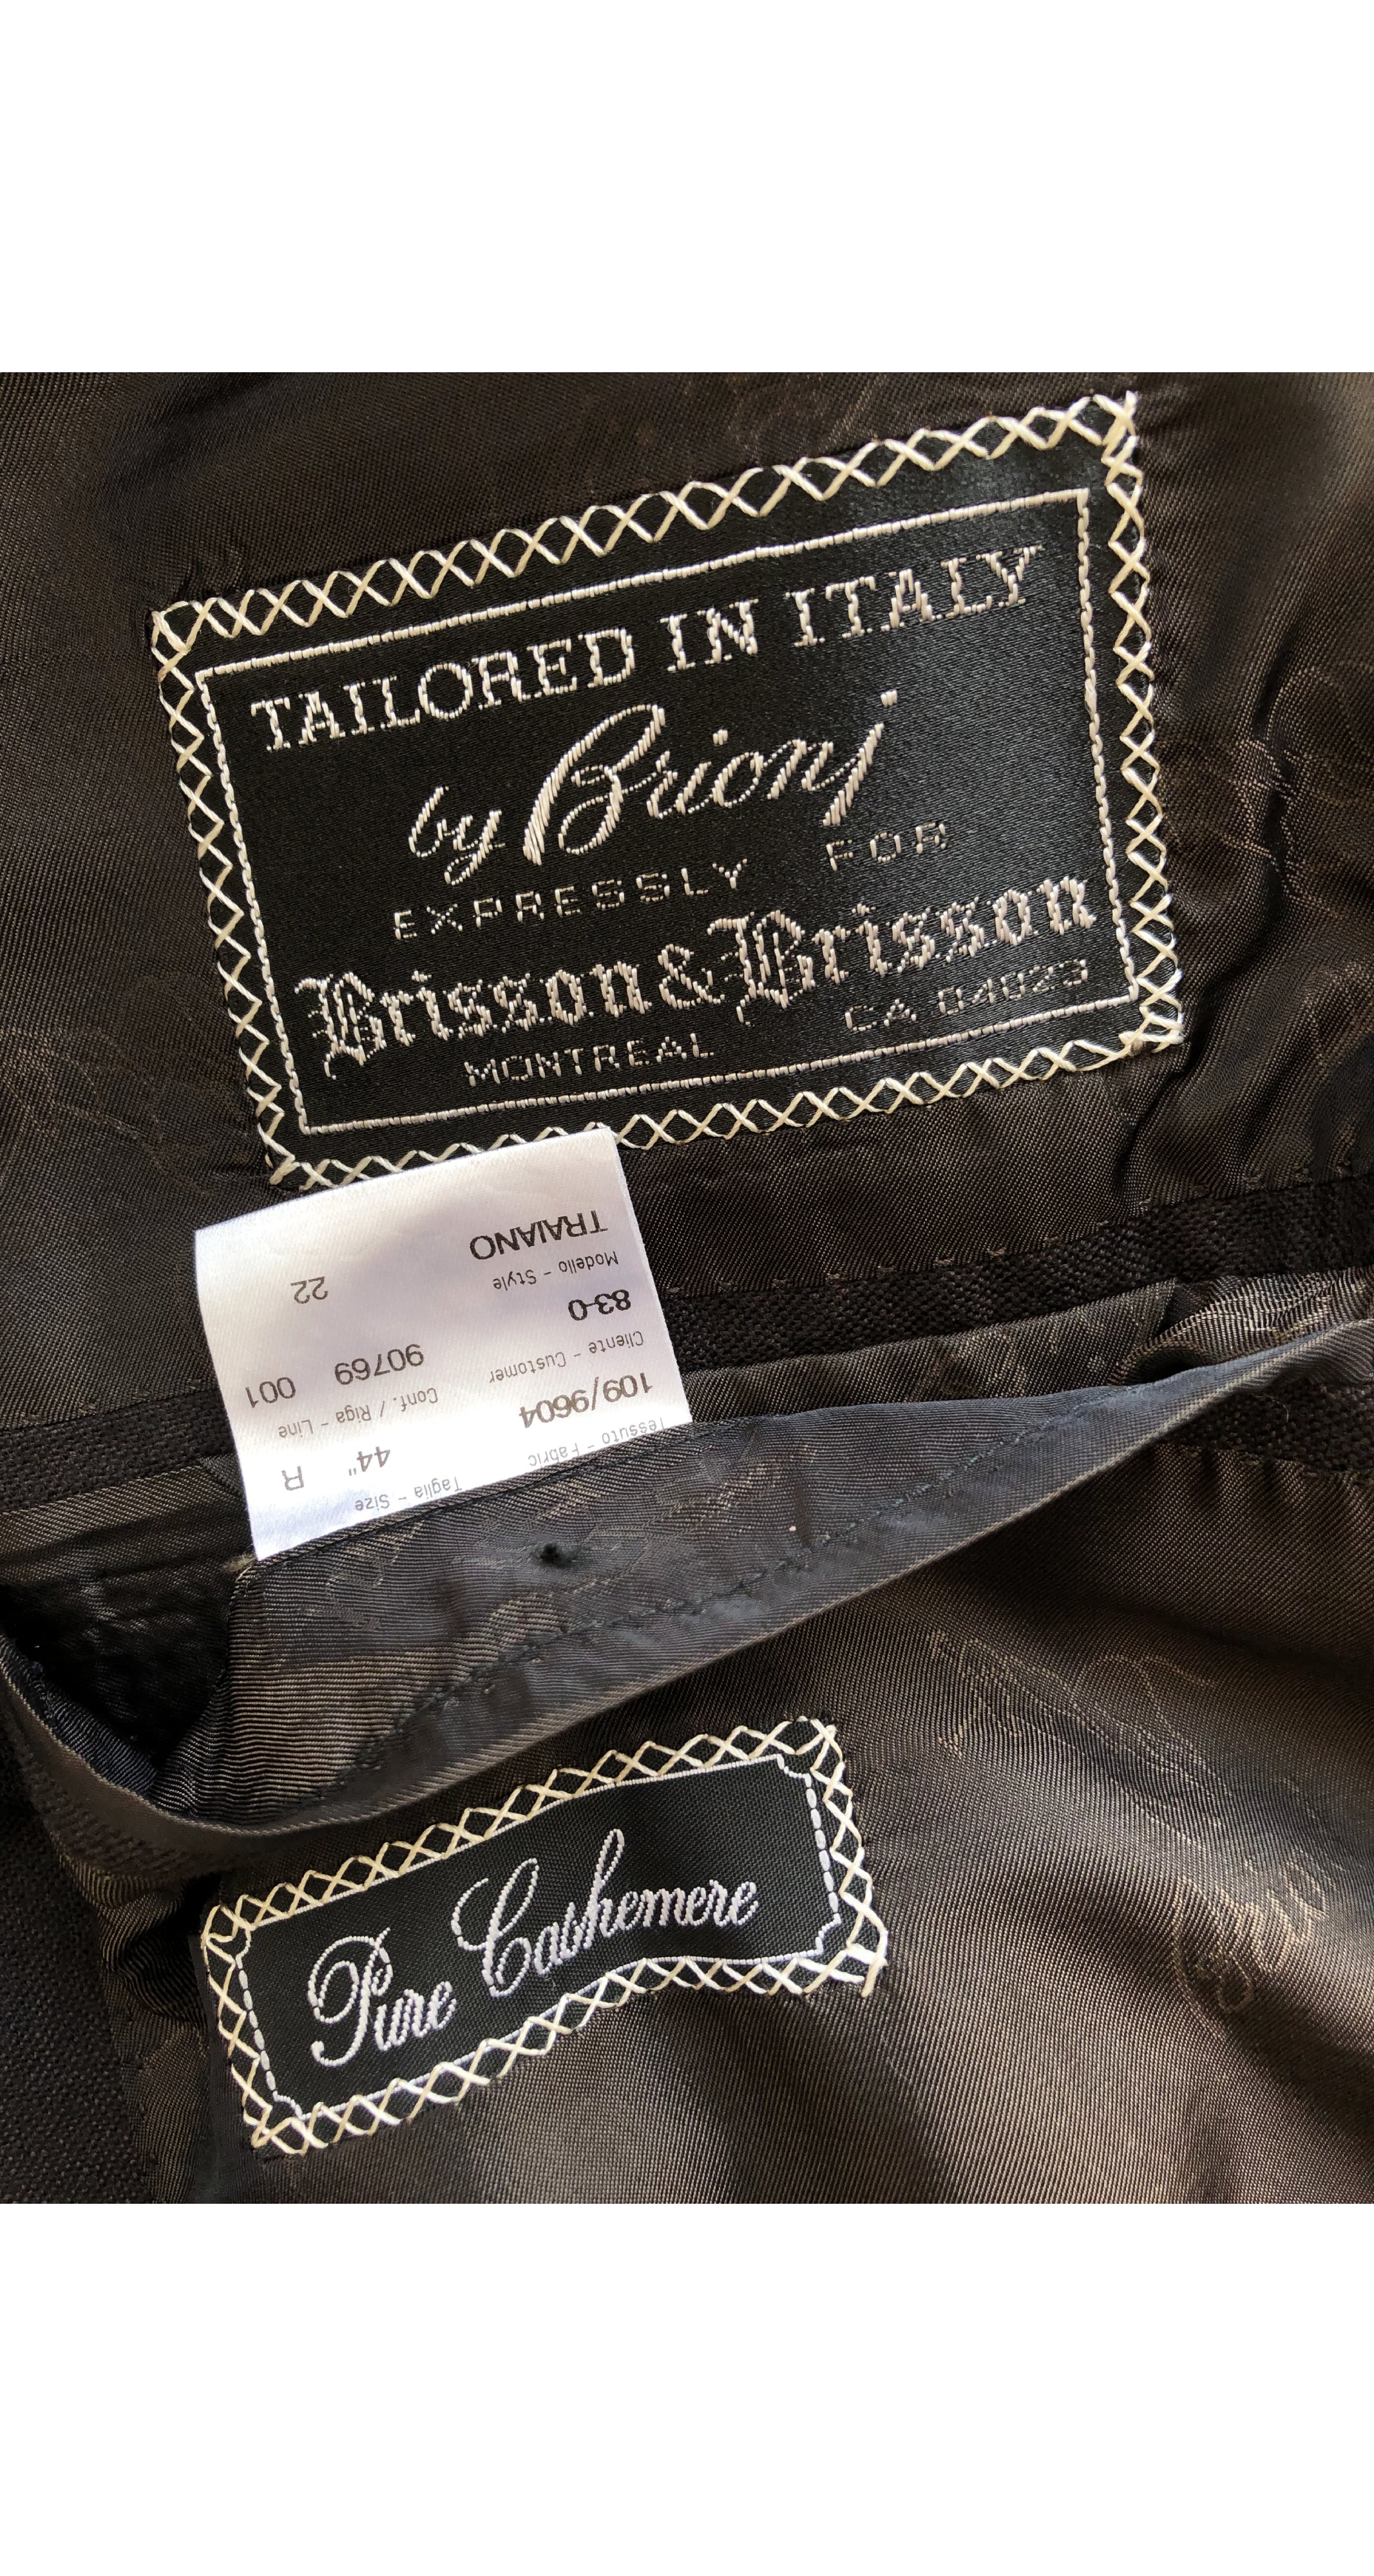 1990s Men's "Traiano" Brown Cashmere Two-Button Blazer Jacket